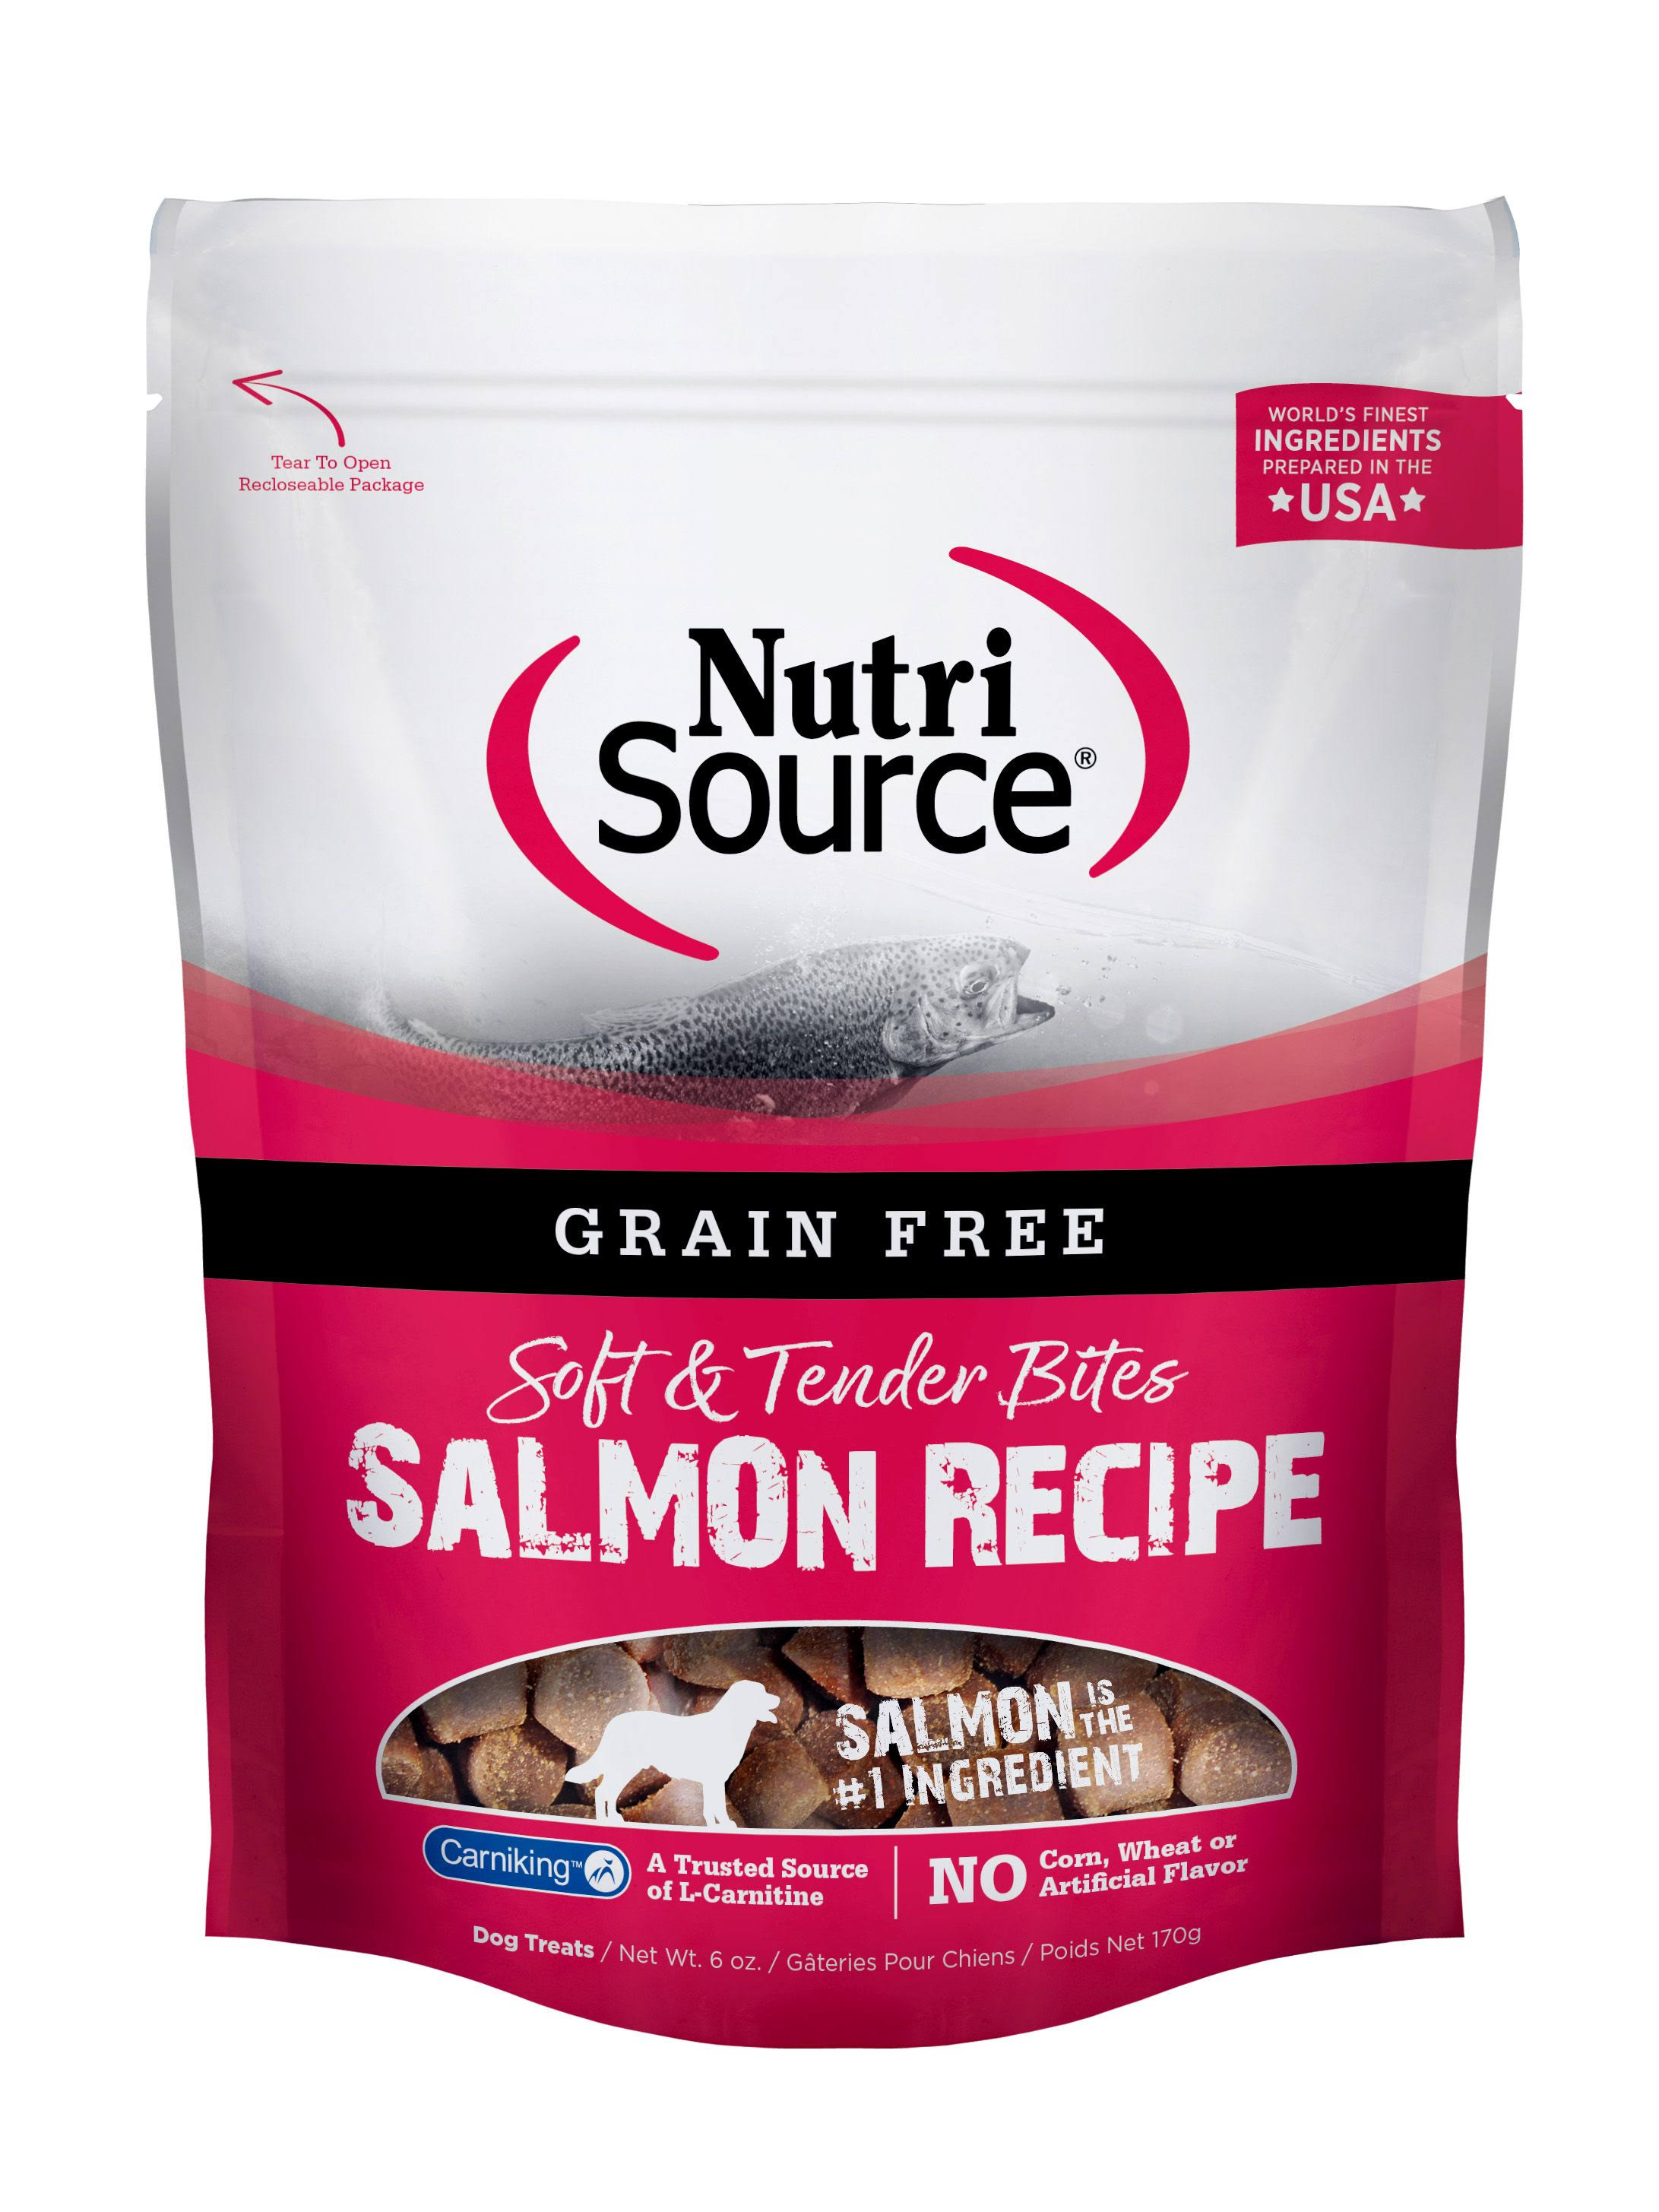 Nutrisource Grain-Free Salmon Bites Dry Dog Treats 6 oz